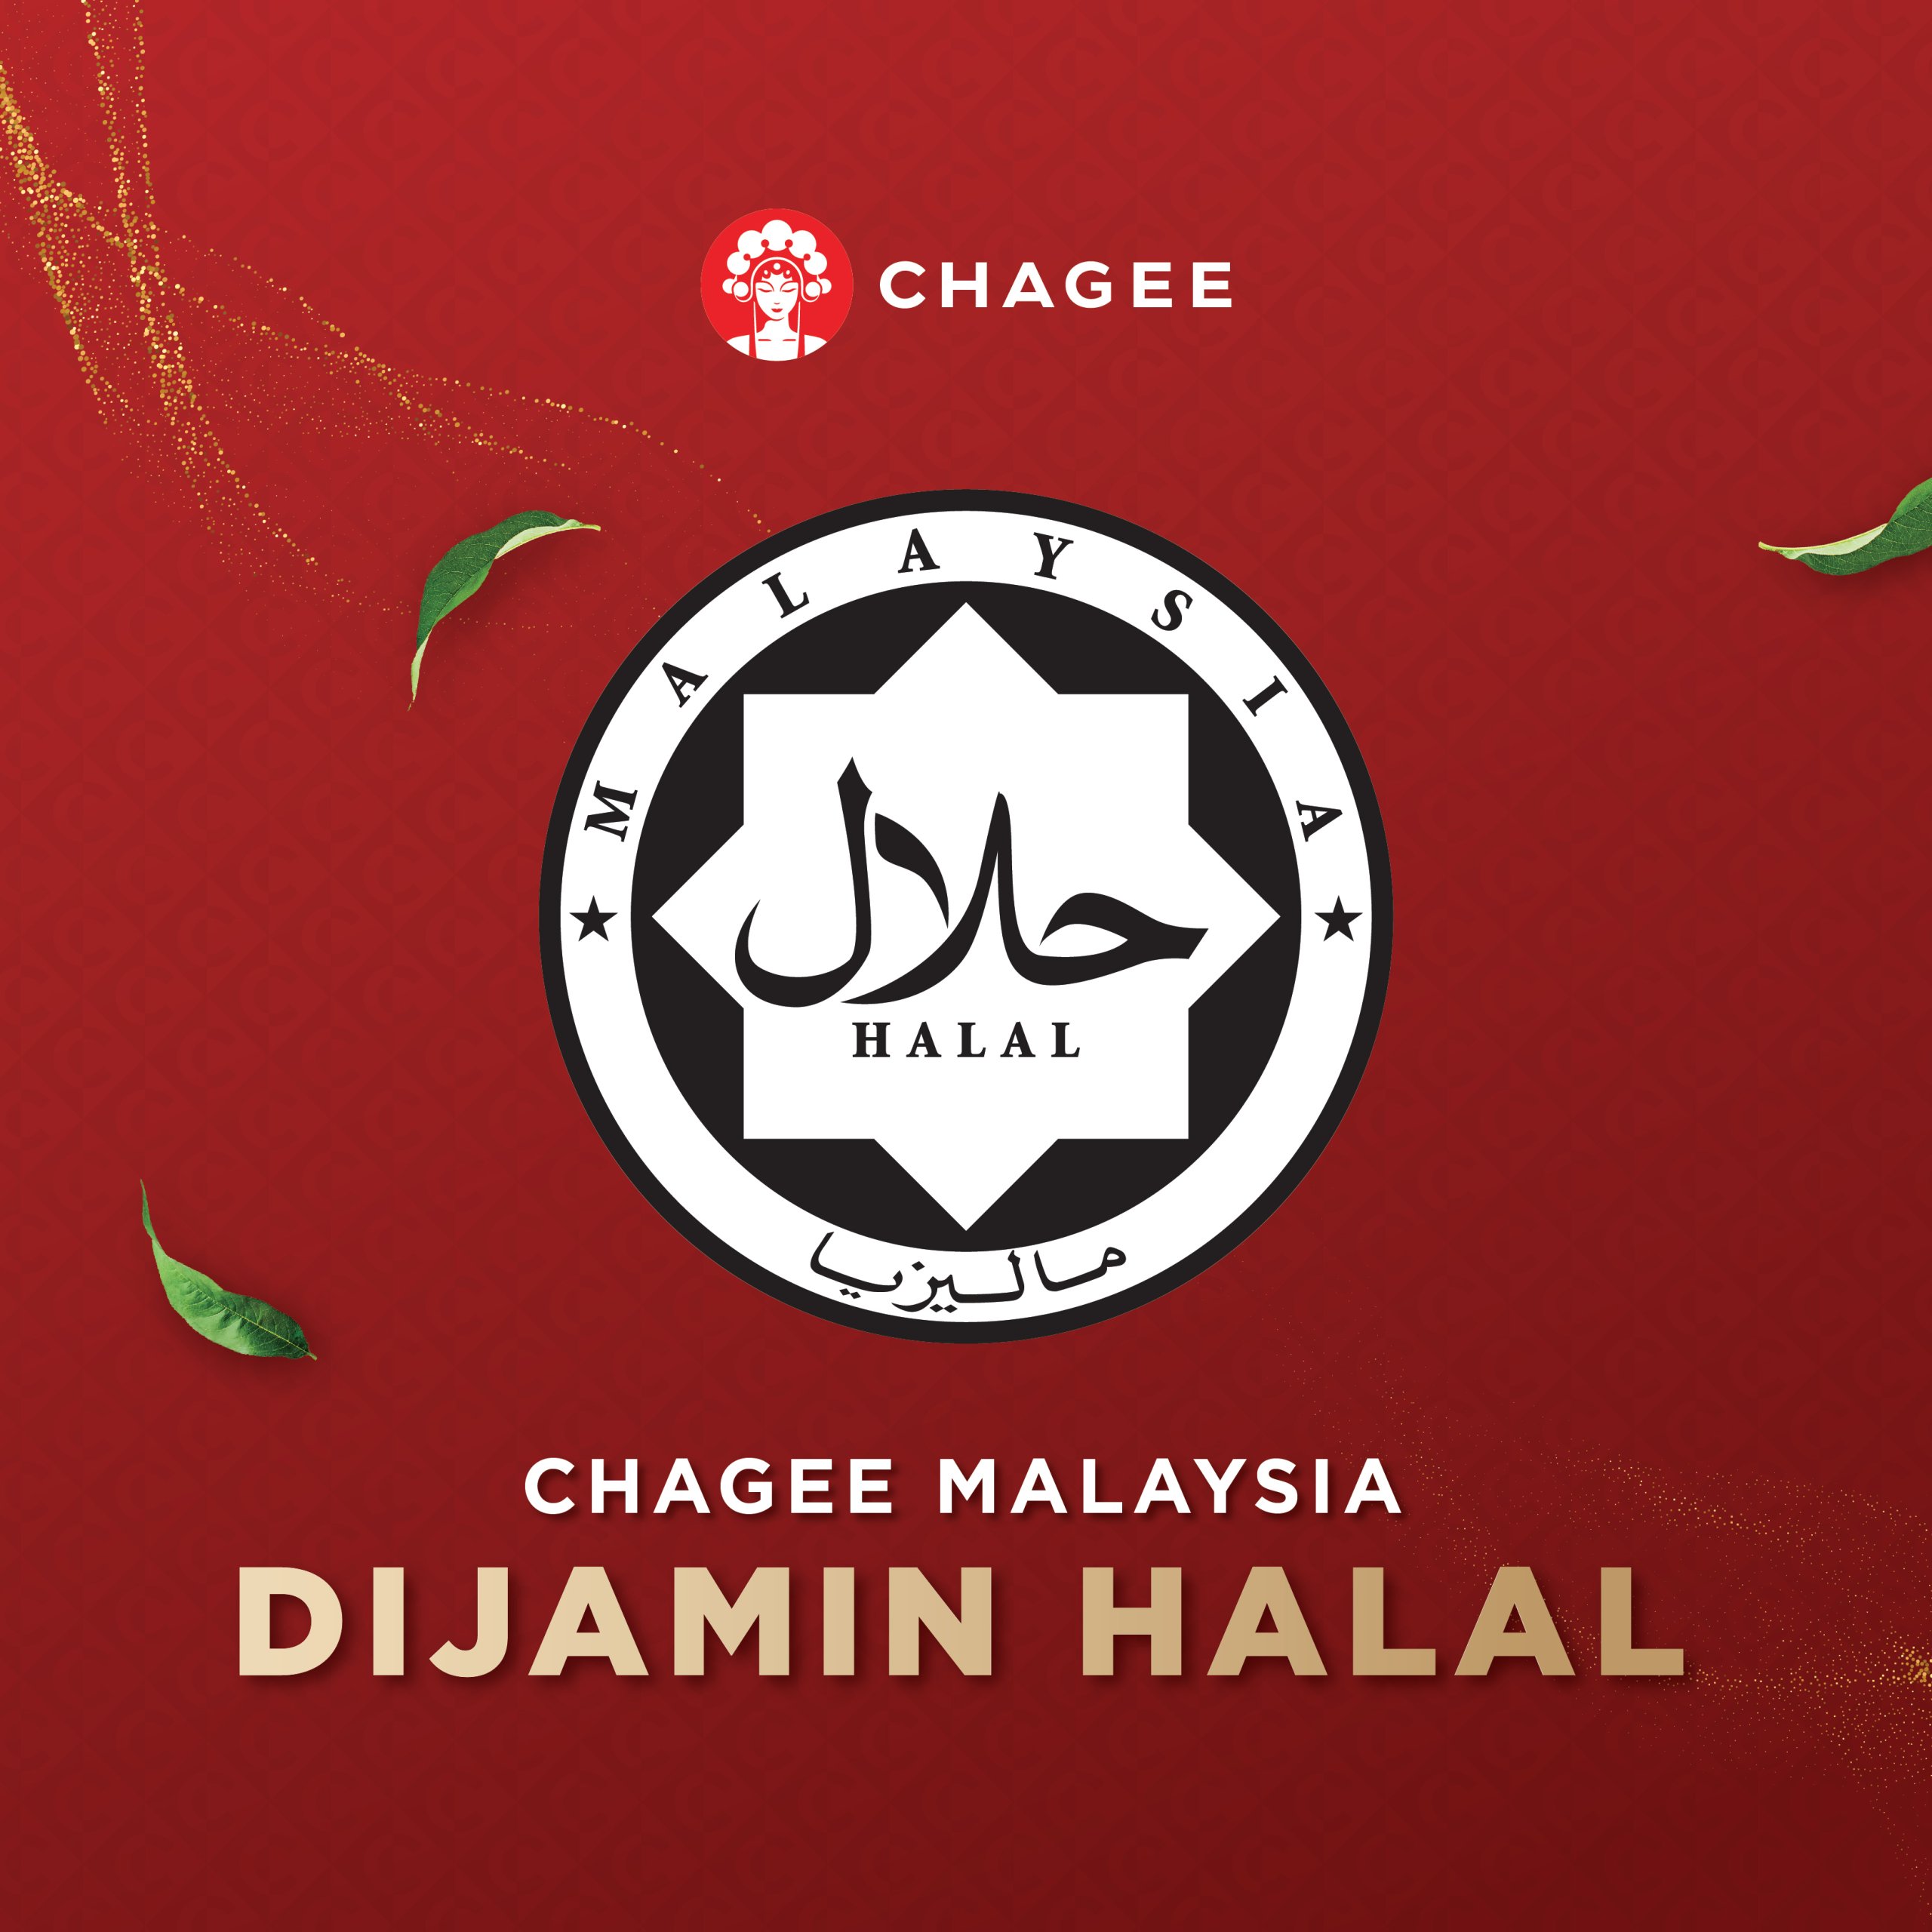 CHAGEE is Now Halal Certified by JAKIM